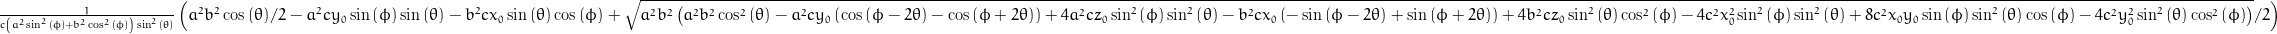 \frac{1}{c \left(a^{2} \sin^{2}{\left (\phi \right )} + b^{2} \cos^{2}{\left (\phi \right )}\right) \sin^{2}{\left (\theta \right )}} \left(\frac{a^{2} b^{2}}{2} \cos{\left (\theta \right )} - a^{2} c y_{0} \sin{\left (\phi \right )} \sin{\left (\theta \right )} - b^{2} c x_{0} \sin{\left (\theta \right )} \cos{\left (\phi \right )} + \frac{1}{2} \sqrt{a^{2} b^{2} \left(a^{2} b^{2} \cos^{2}{\left (\theta \right )} - a^{2} c y_{0} \left(\cos{\left (\phi - 2 \theta \right )} - \cos{\left (\phi + 2 \theta \right )}\right) + 4 a^{2} c z_{0} \sin^{2}{\left (\phi \right )} \sin^{2}{\left (\theta \right )} - b^{2} c x_{0} \left(- \sin{\left (\phi - 2 \theta \right )} + \sin{\left (\phi + 2 \theta \right )}\right) + 4 b^{2} c z_{0} \sin^{2}{\left (\theta \right )} \cos^{2}{\left (\phi \right )} - 4 c^{2} x_{0}^{2} \sin^{2}{\left (\phi \right )} \sin^{2}{\left (\theta \right )} + 8 c^{2} x_{0} y_{0} \sin{\left (\phi \right )} \sin^{2}{\left (\theta \right )} \cos{\left (\phi \right )} - 4 c^{2} y_{0}^{2} \sin^{2}{\left (\theta \right )} \cos^{2}{\left (\phi \right )}\right)}\right)